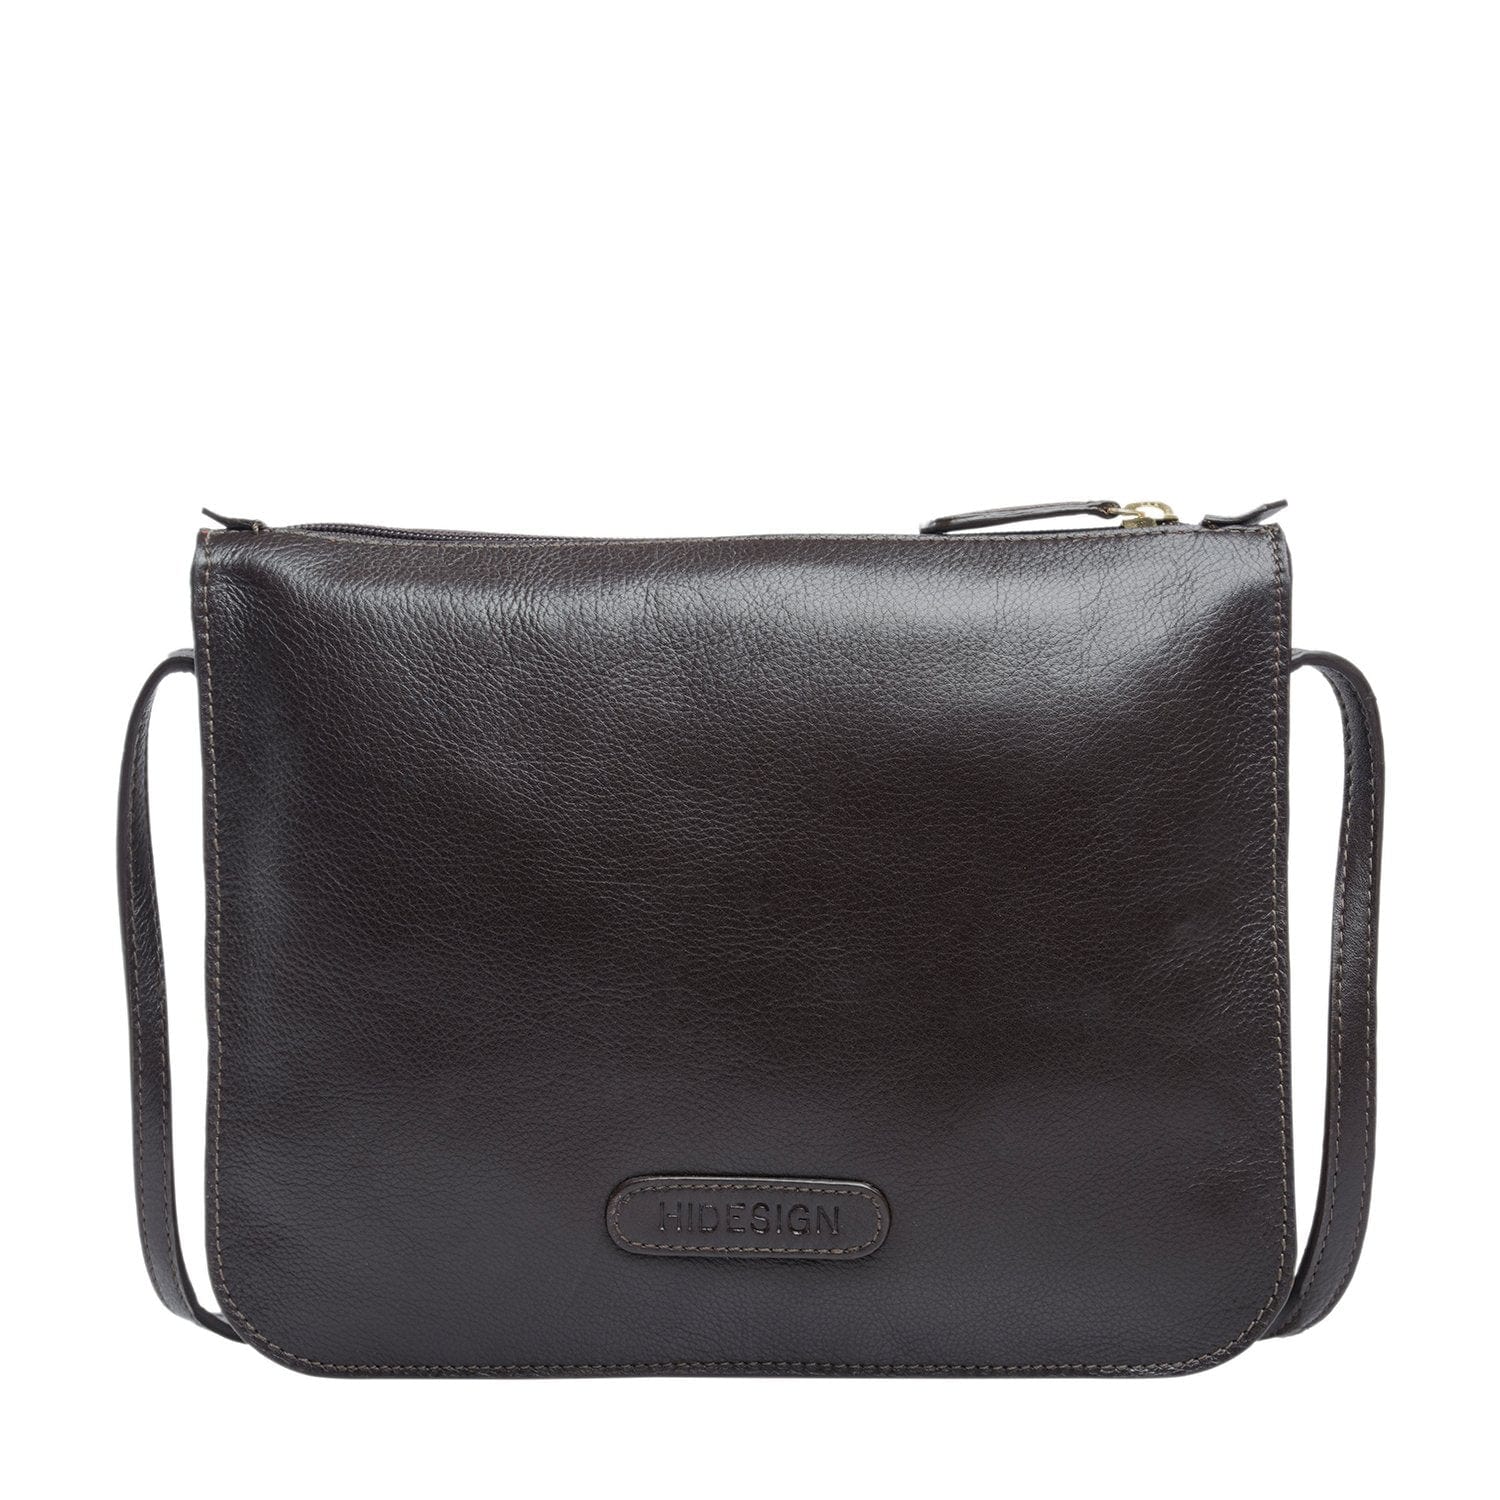 Hidesign Carmel Small Leather Sling Bag